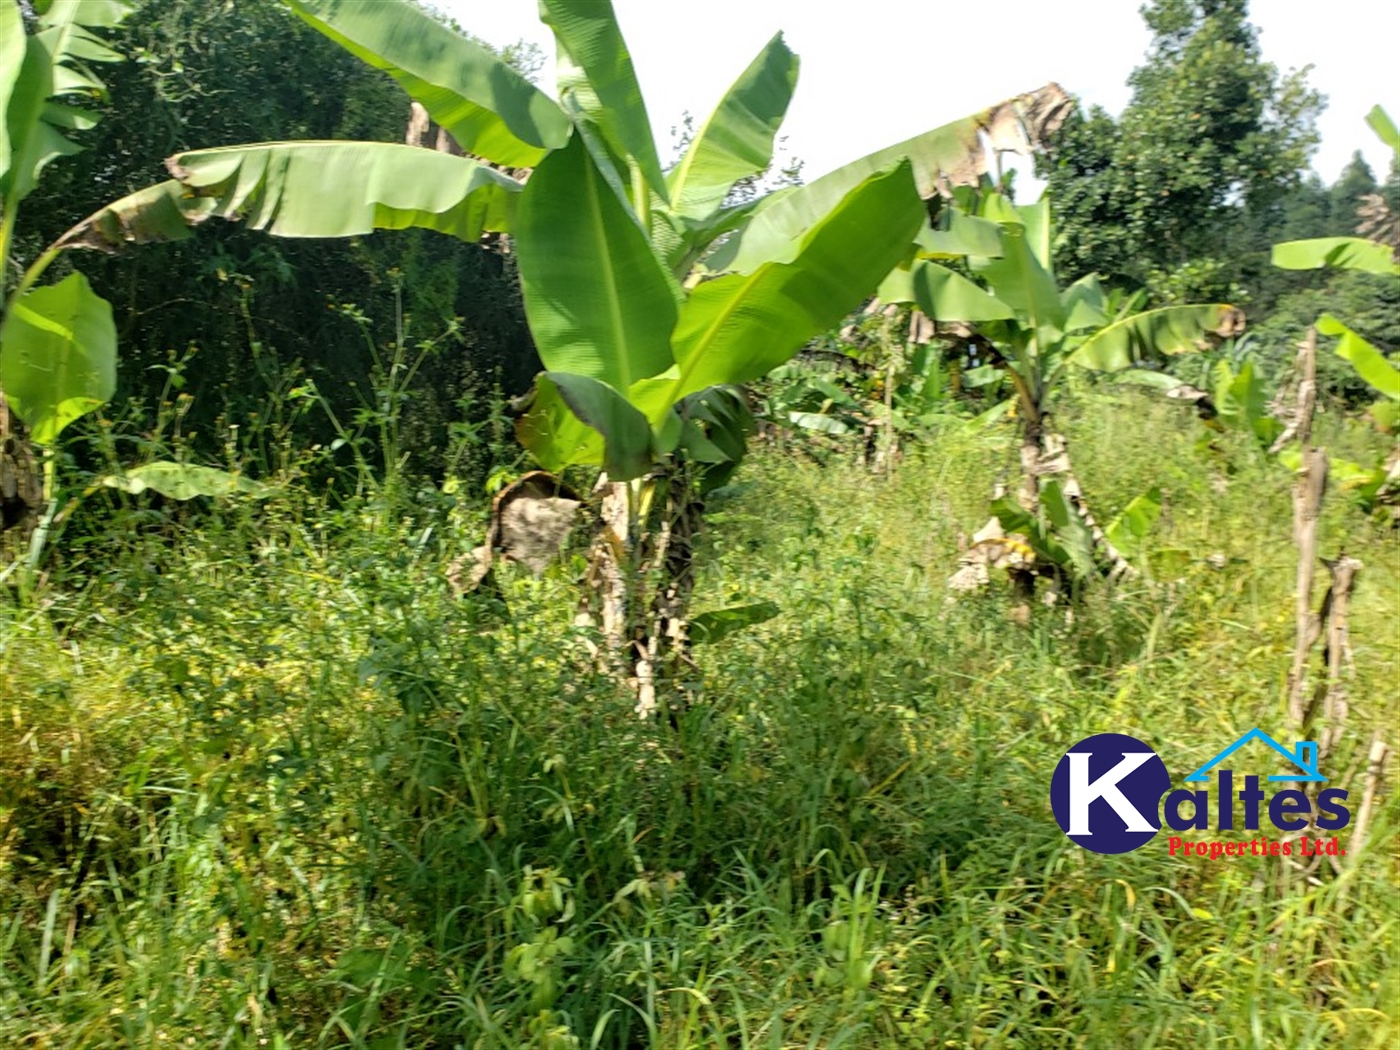 Agricultural Land for sale in Bulangi Kayunga